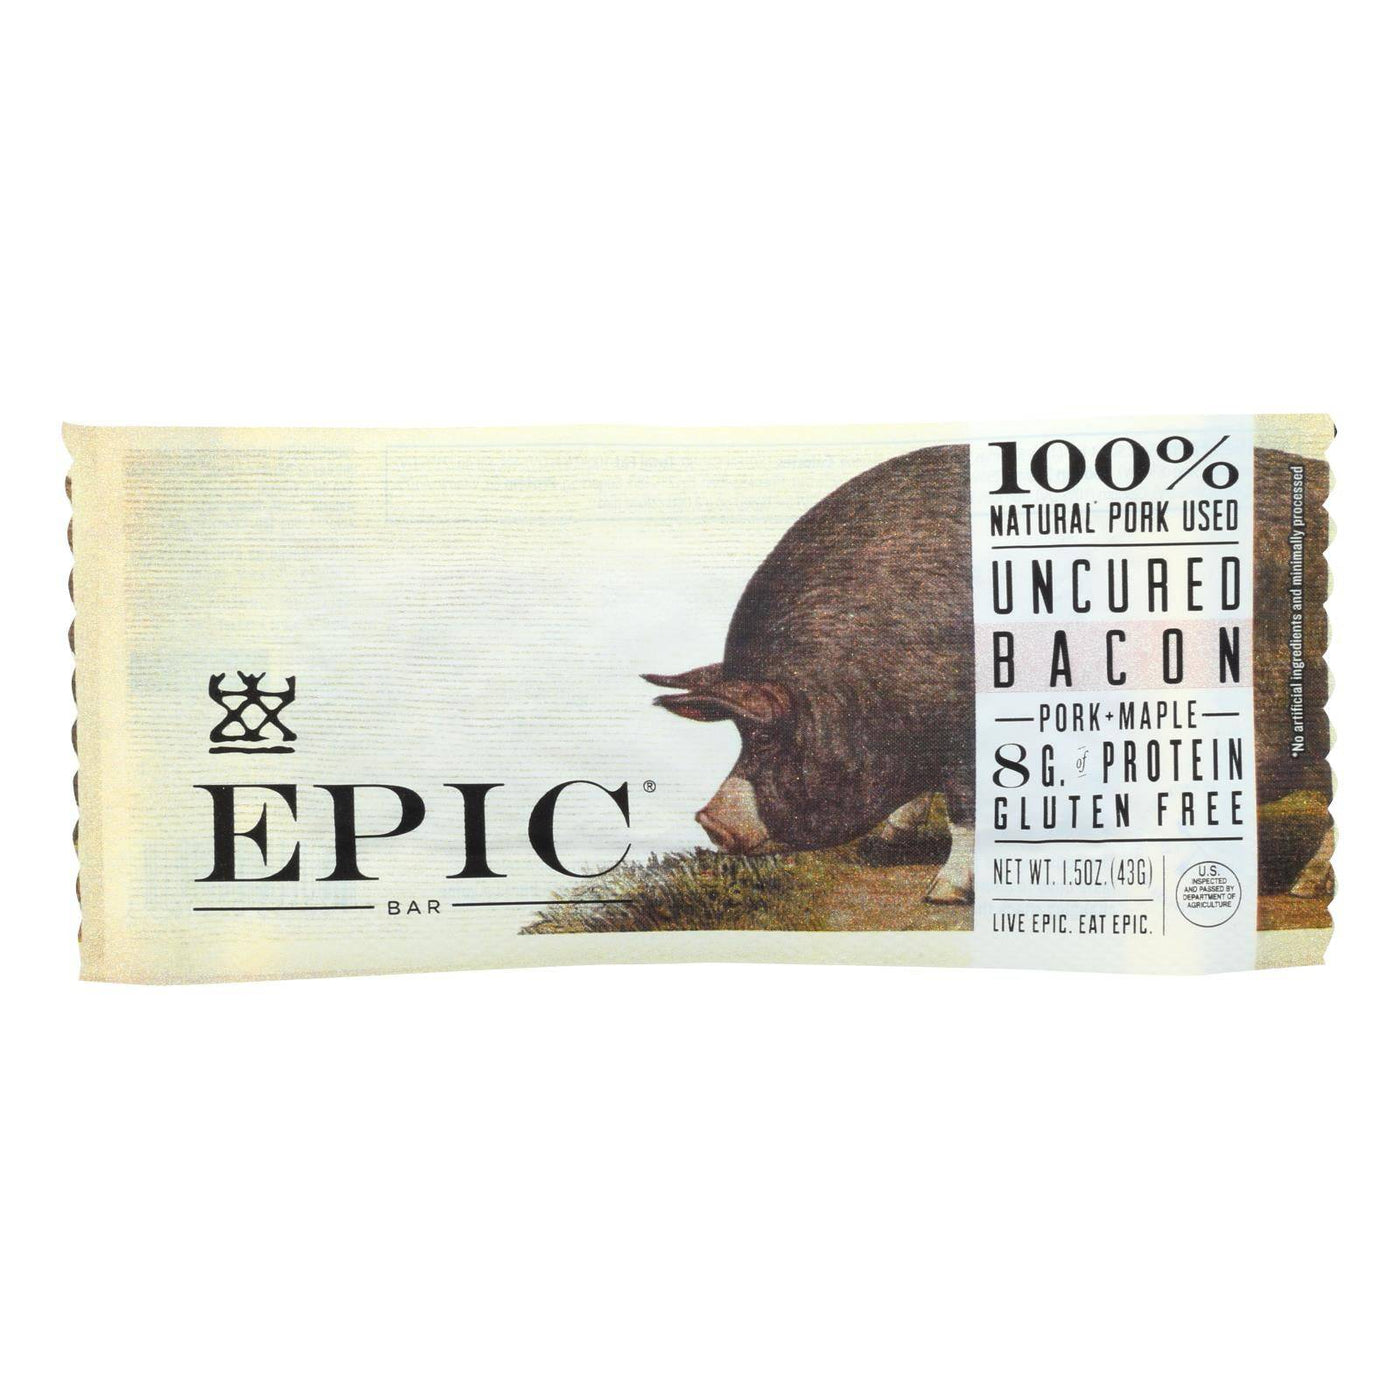 Epic - Bar - Pork - Maple - Uncured Bacon - Case Of 12 - 1.5 Oz | OnlyNaturals.us